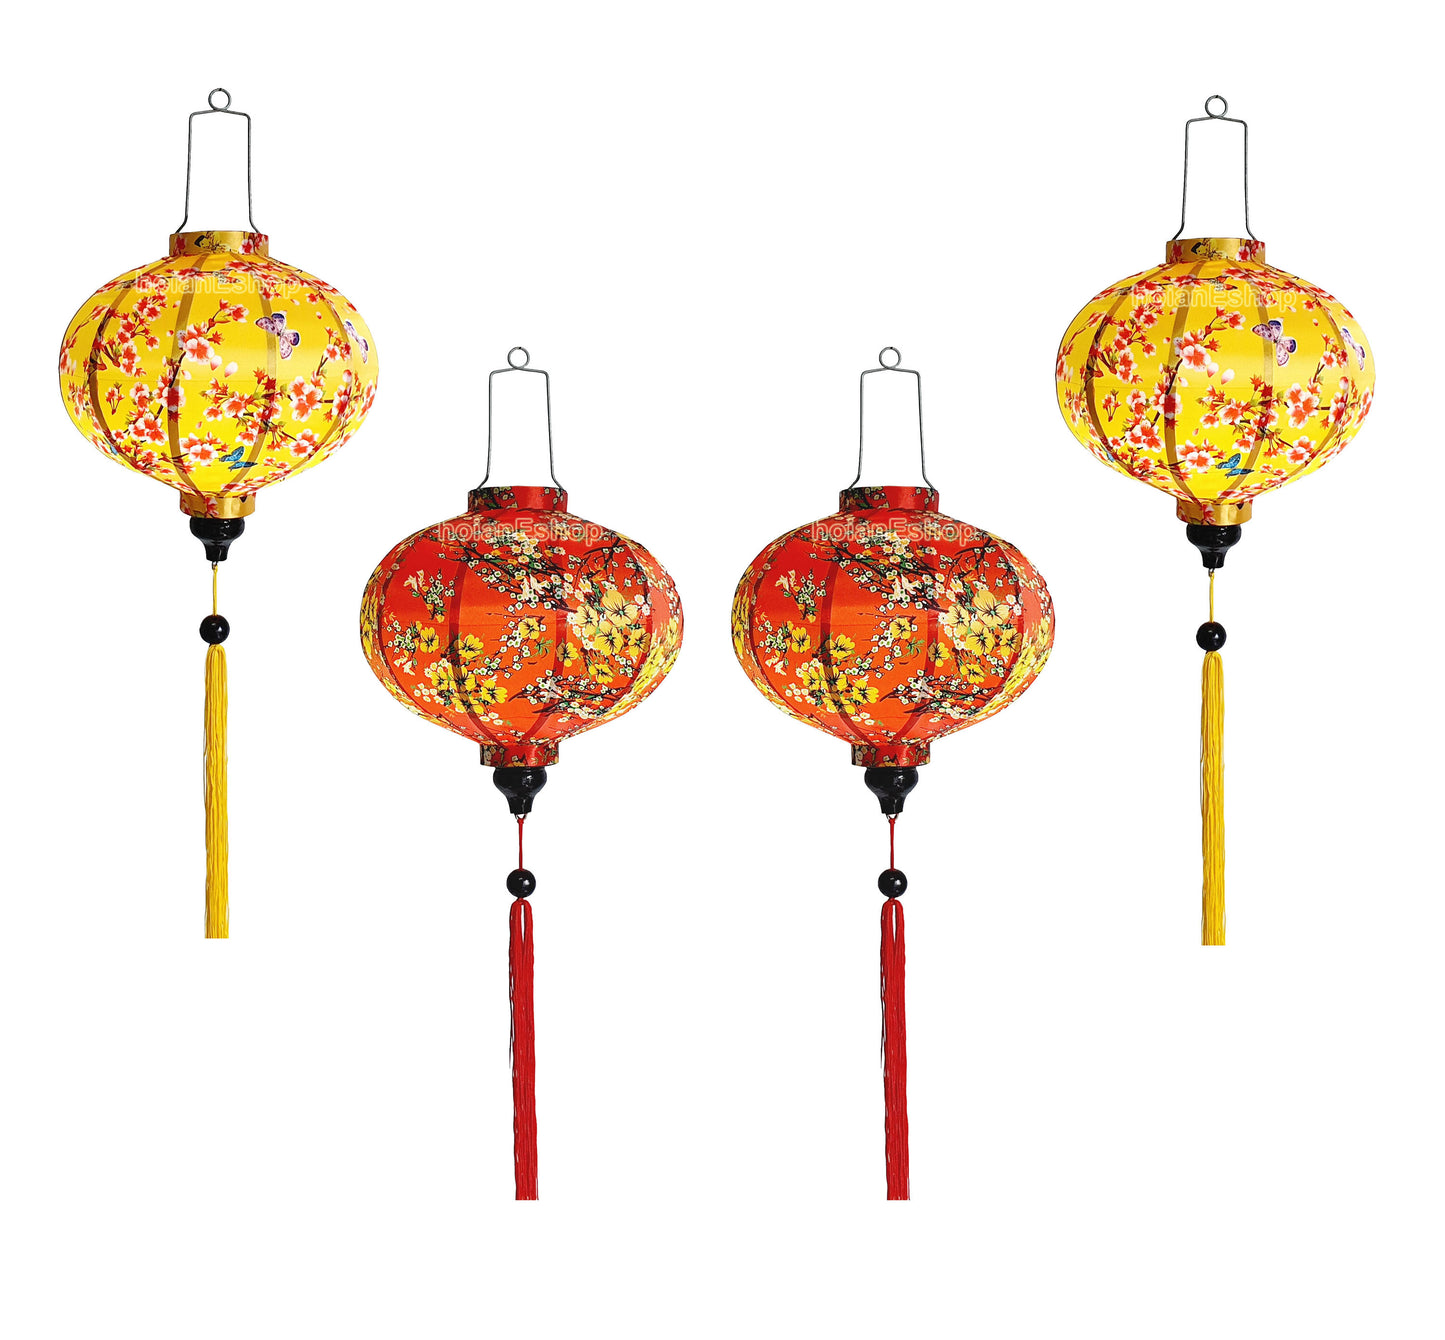 Set 4 silk lanterns for wedding party decor - garden decor - Lantern for patio hanging - Lunar New Year decorations - Christmas decor